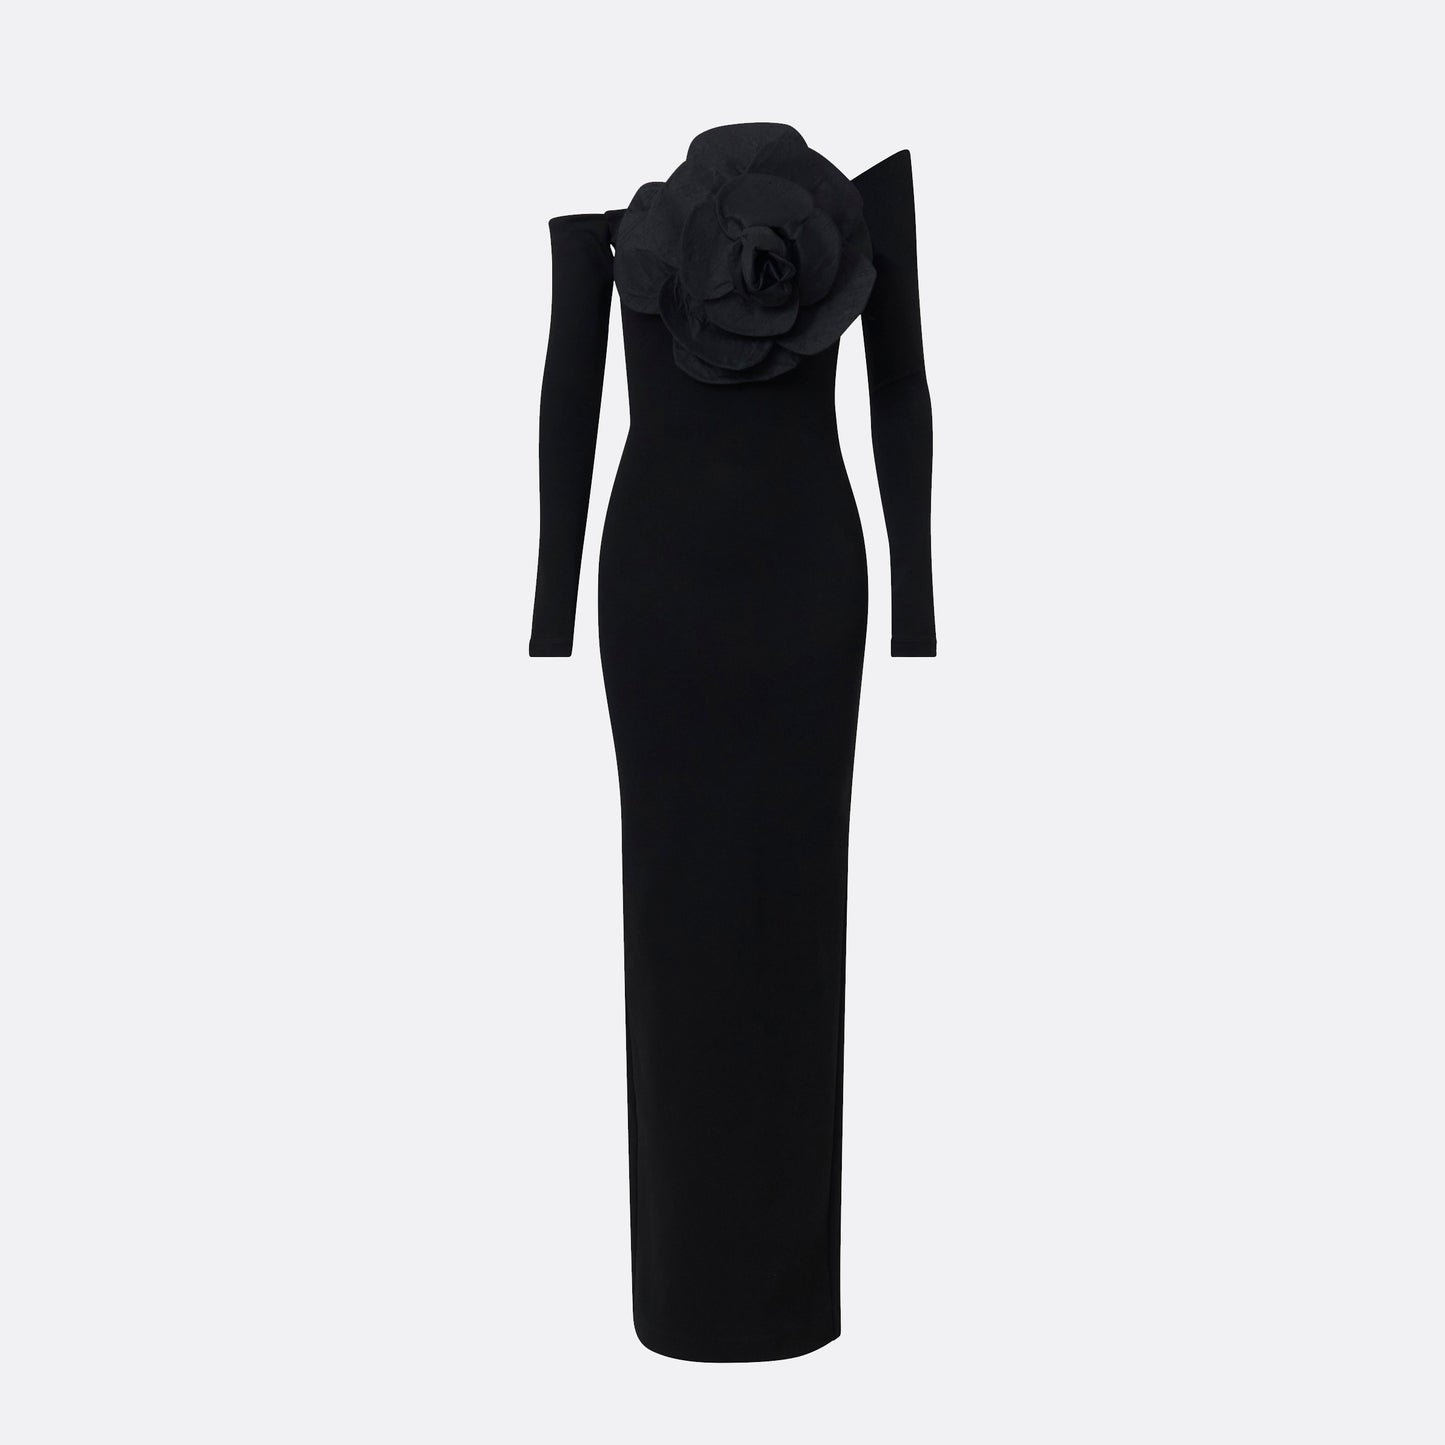 Charlotte Rose Dress - Black / Black